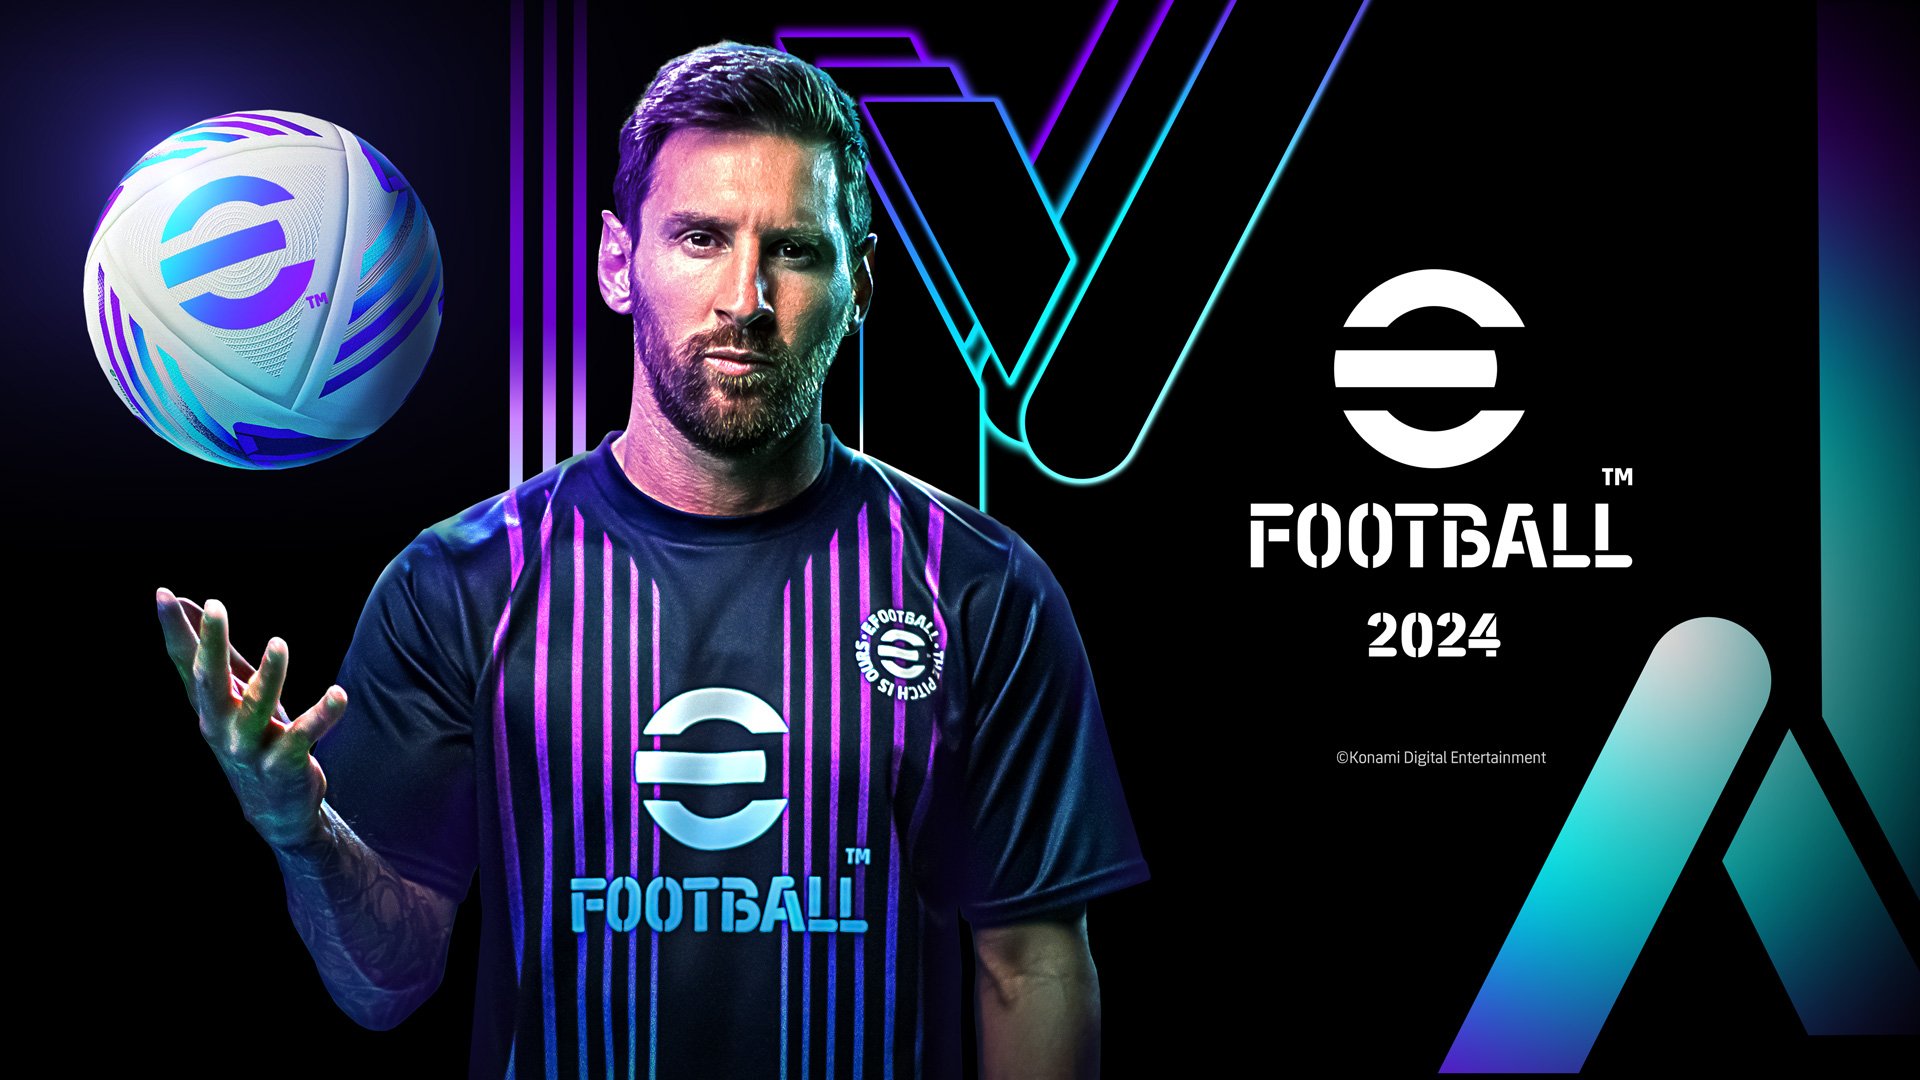 eFootball 2023 Future Roadmap Revealed